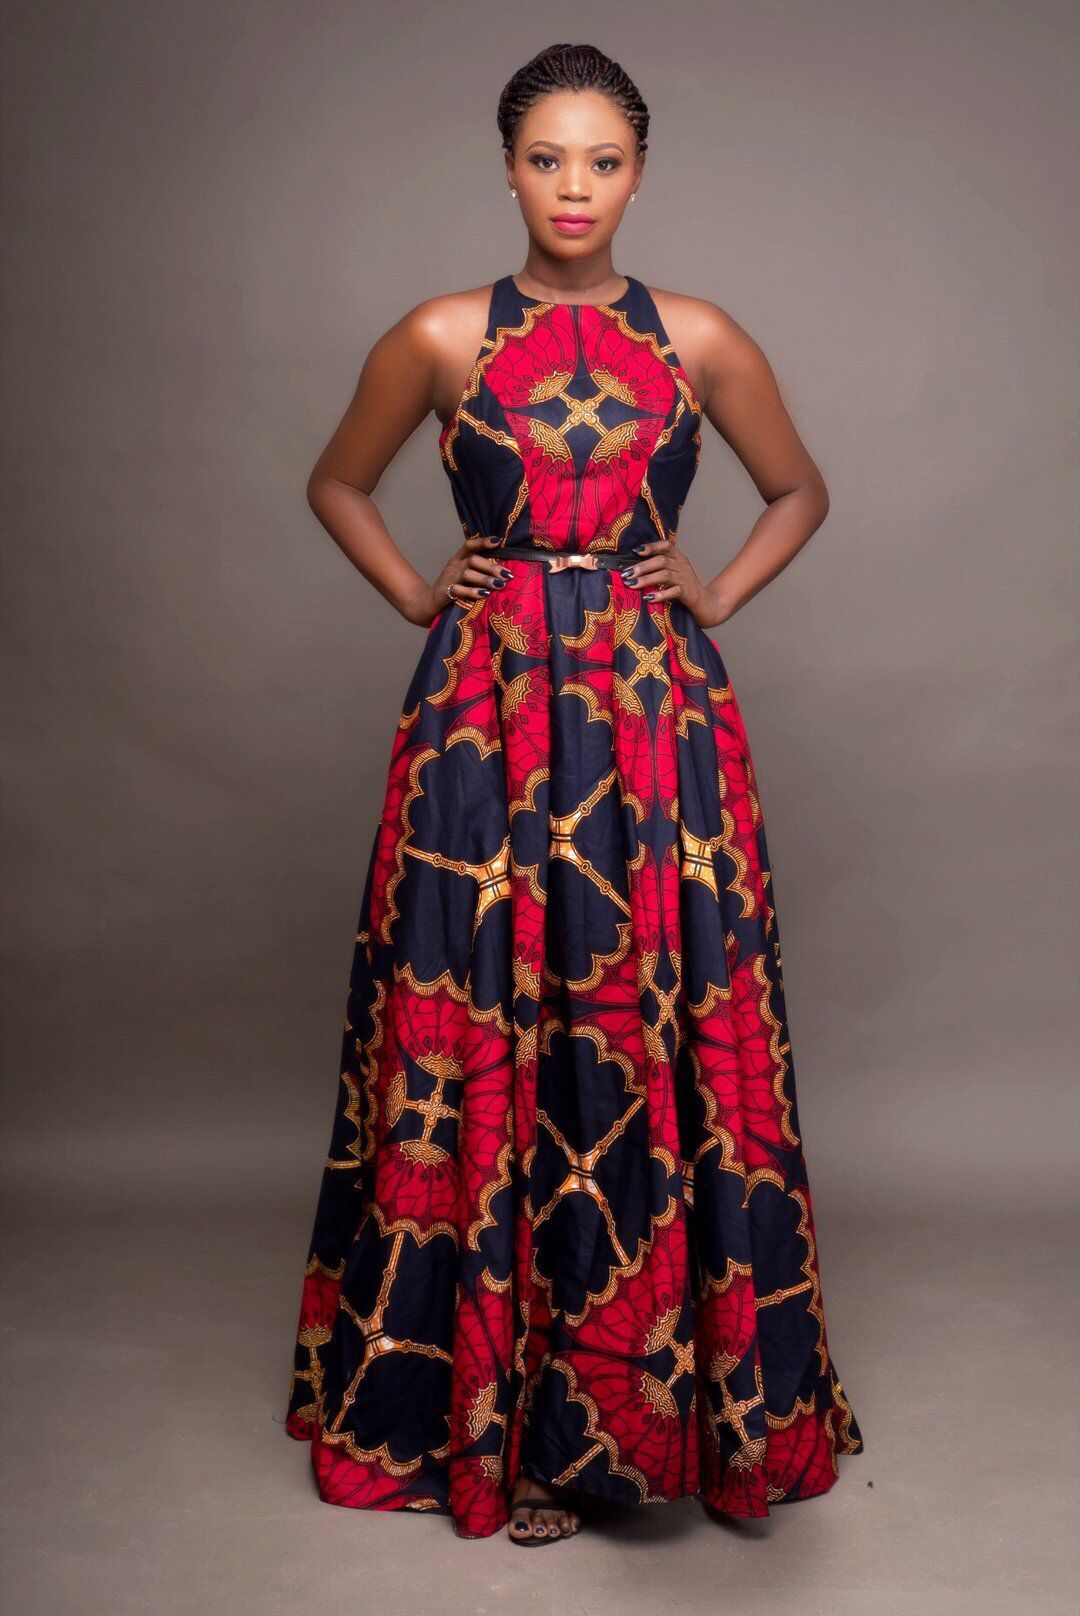 Digital round neck sleeveless African style women's dress